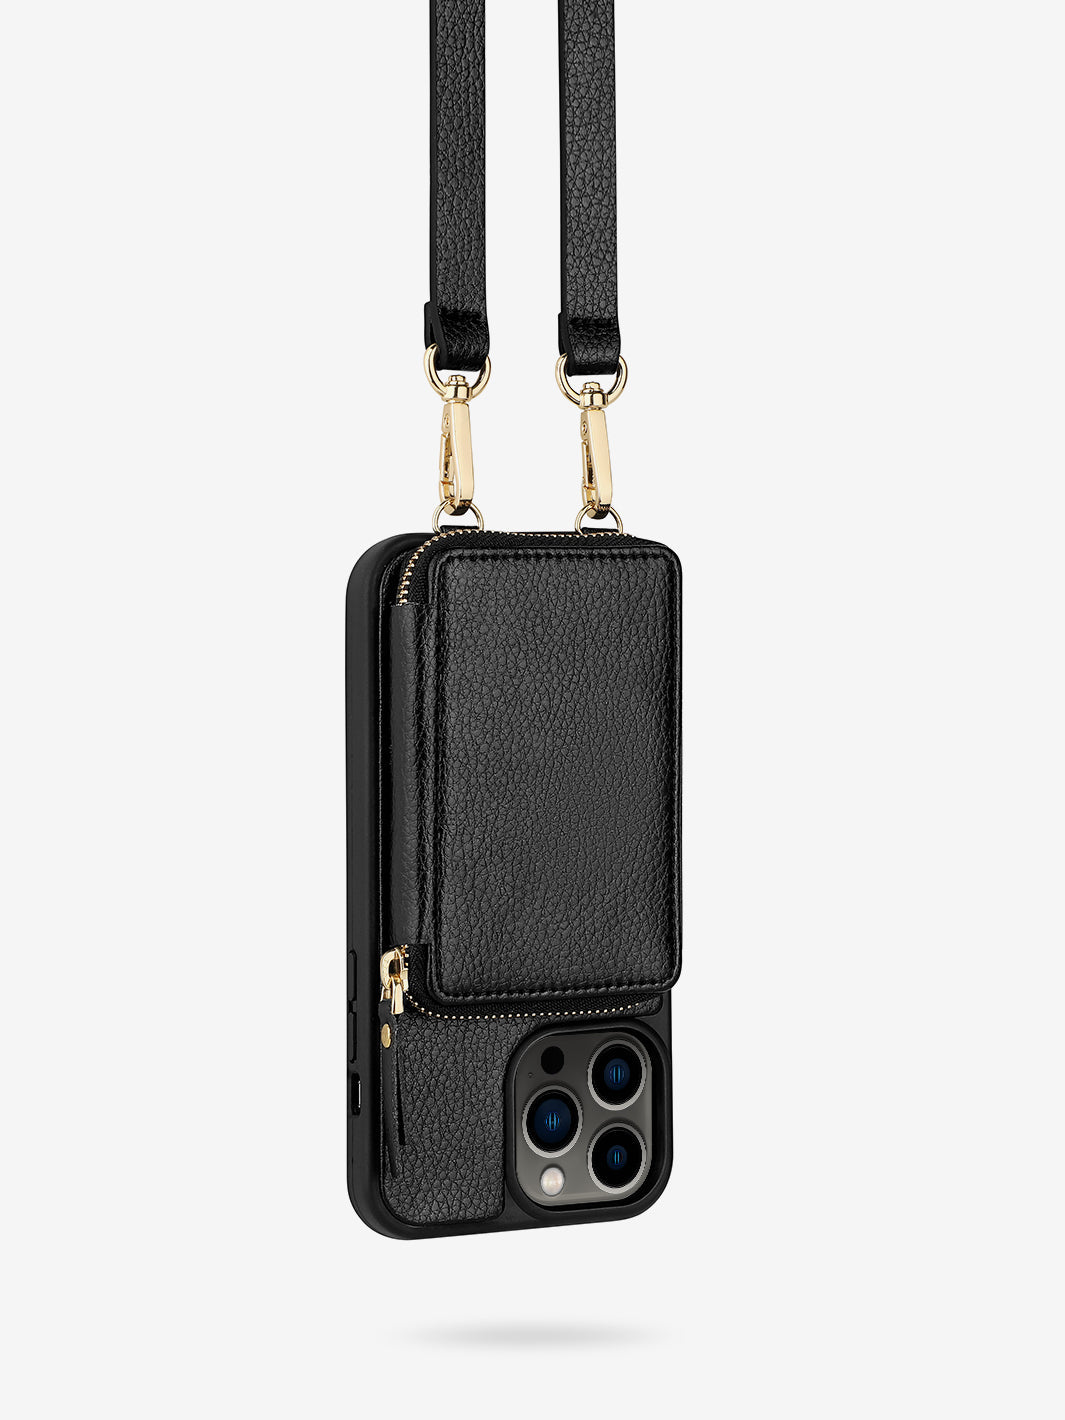 Lychee Crossbody iPhone case in black-3